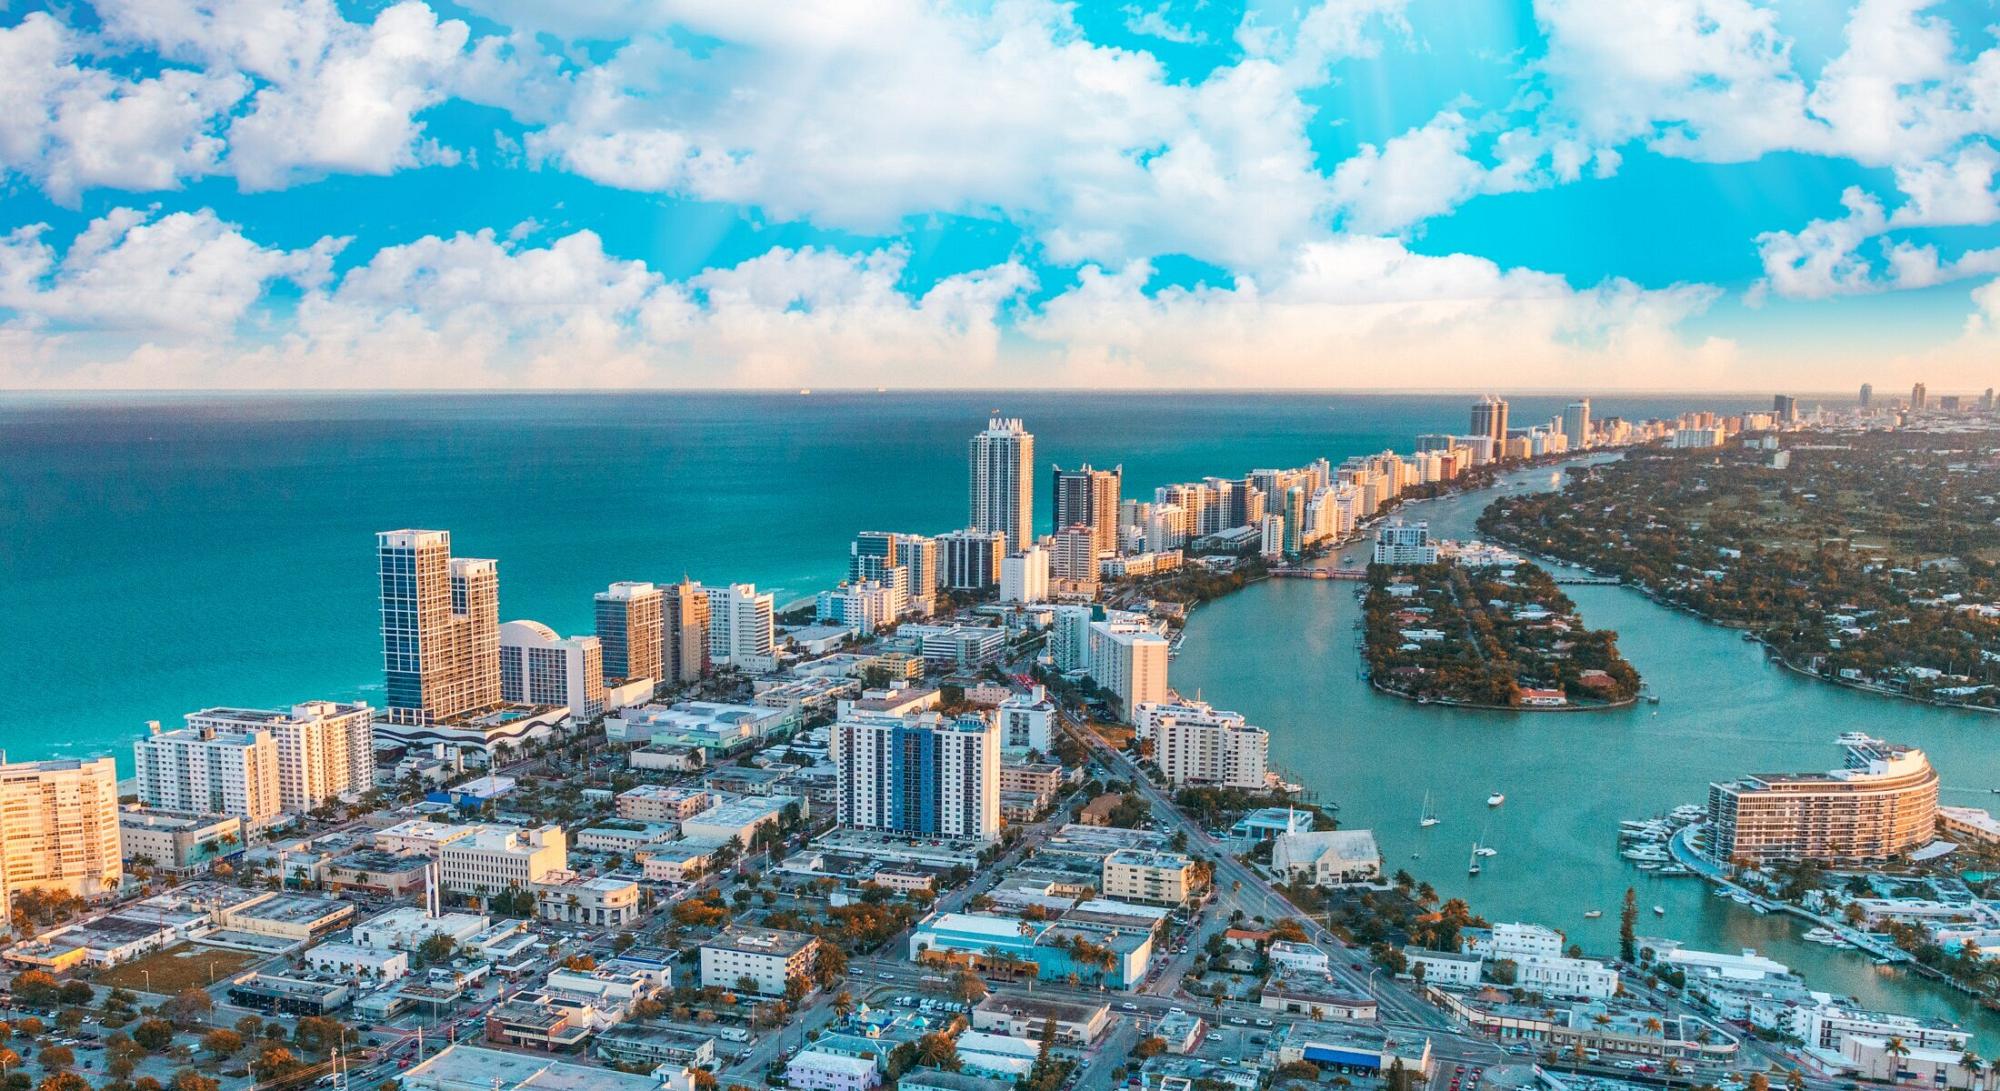 Ocean Drive Medspa feature - Aerial view of Florida coastline